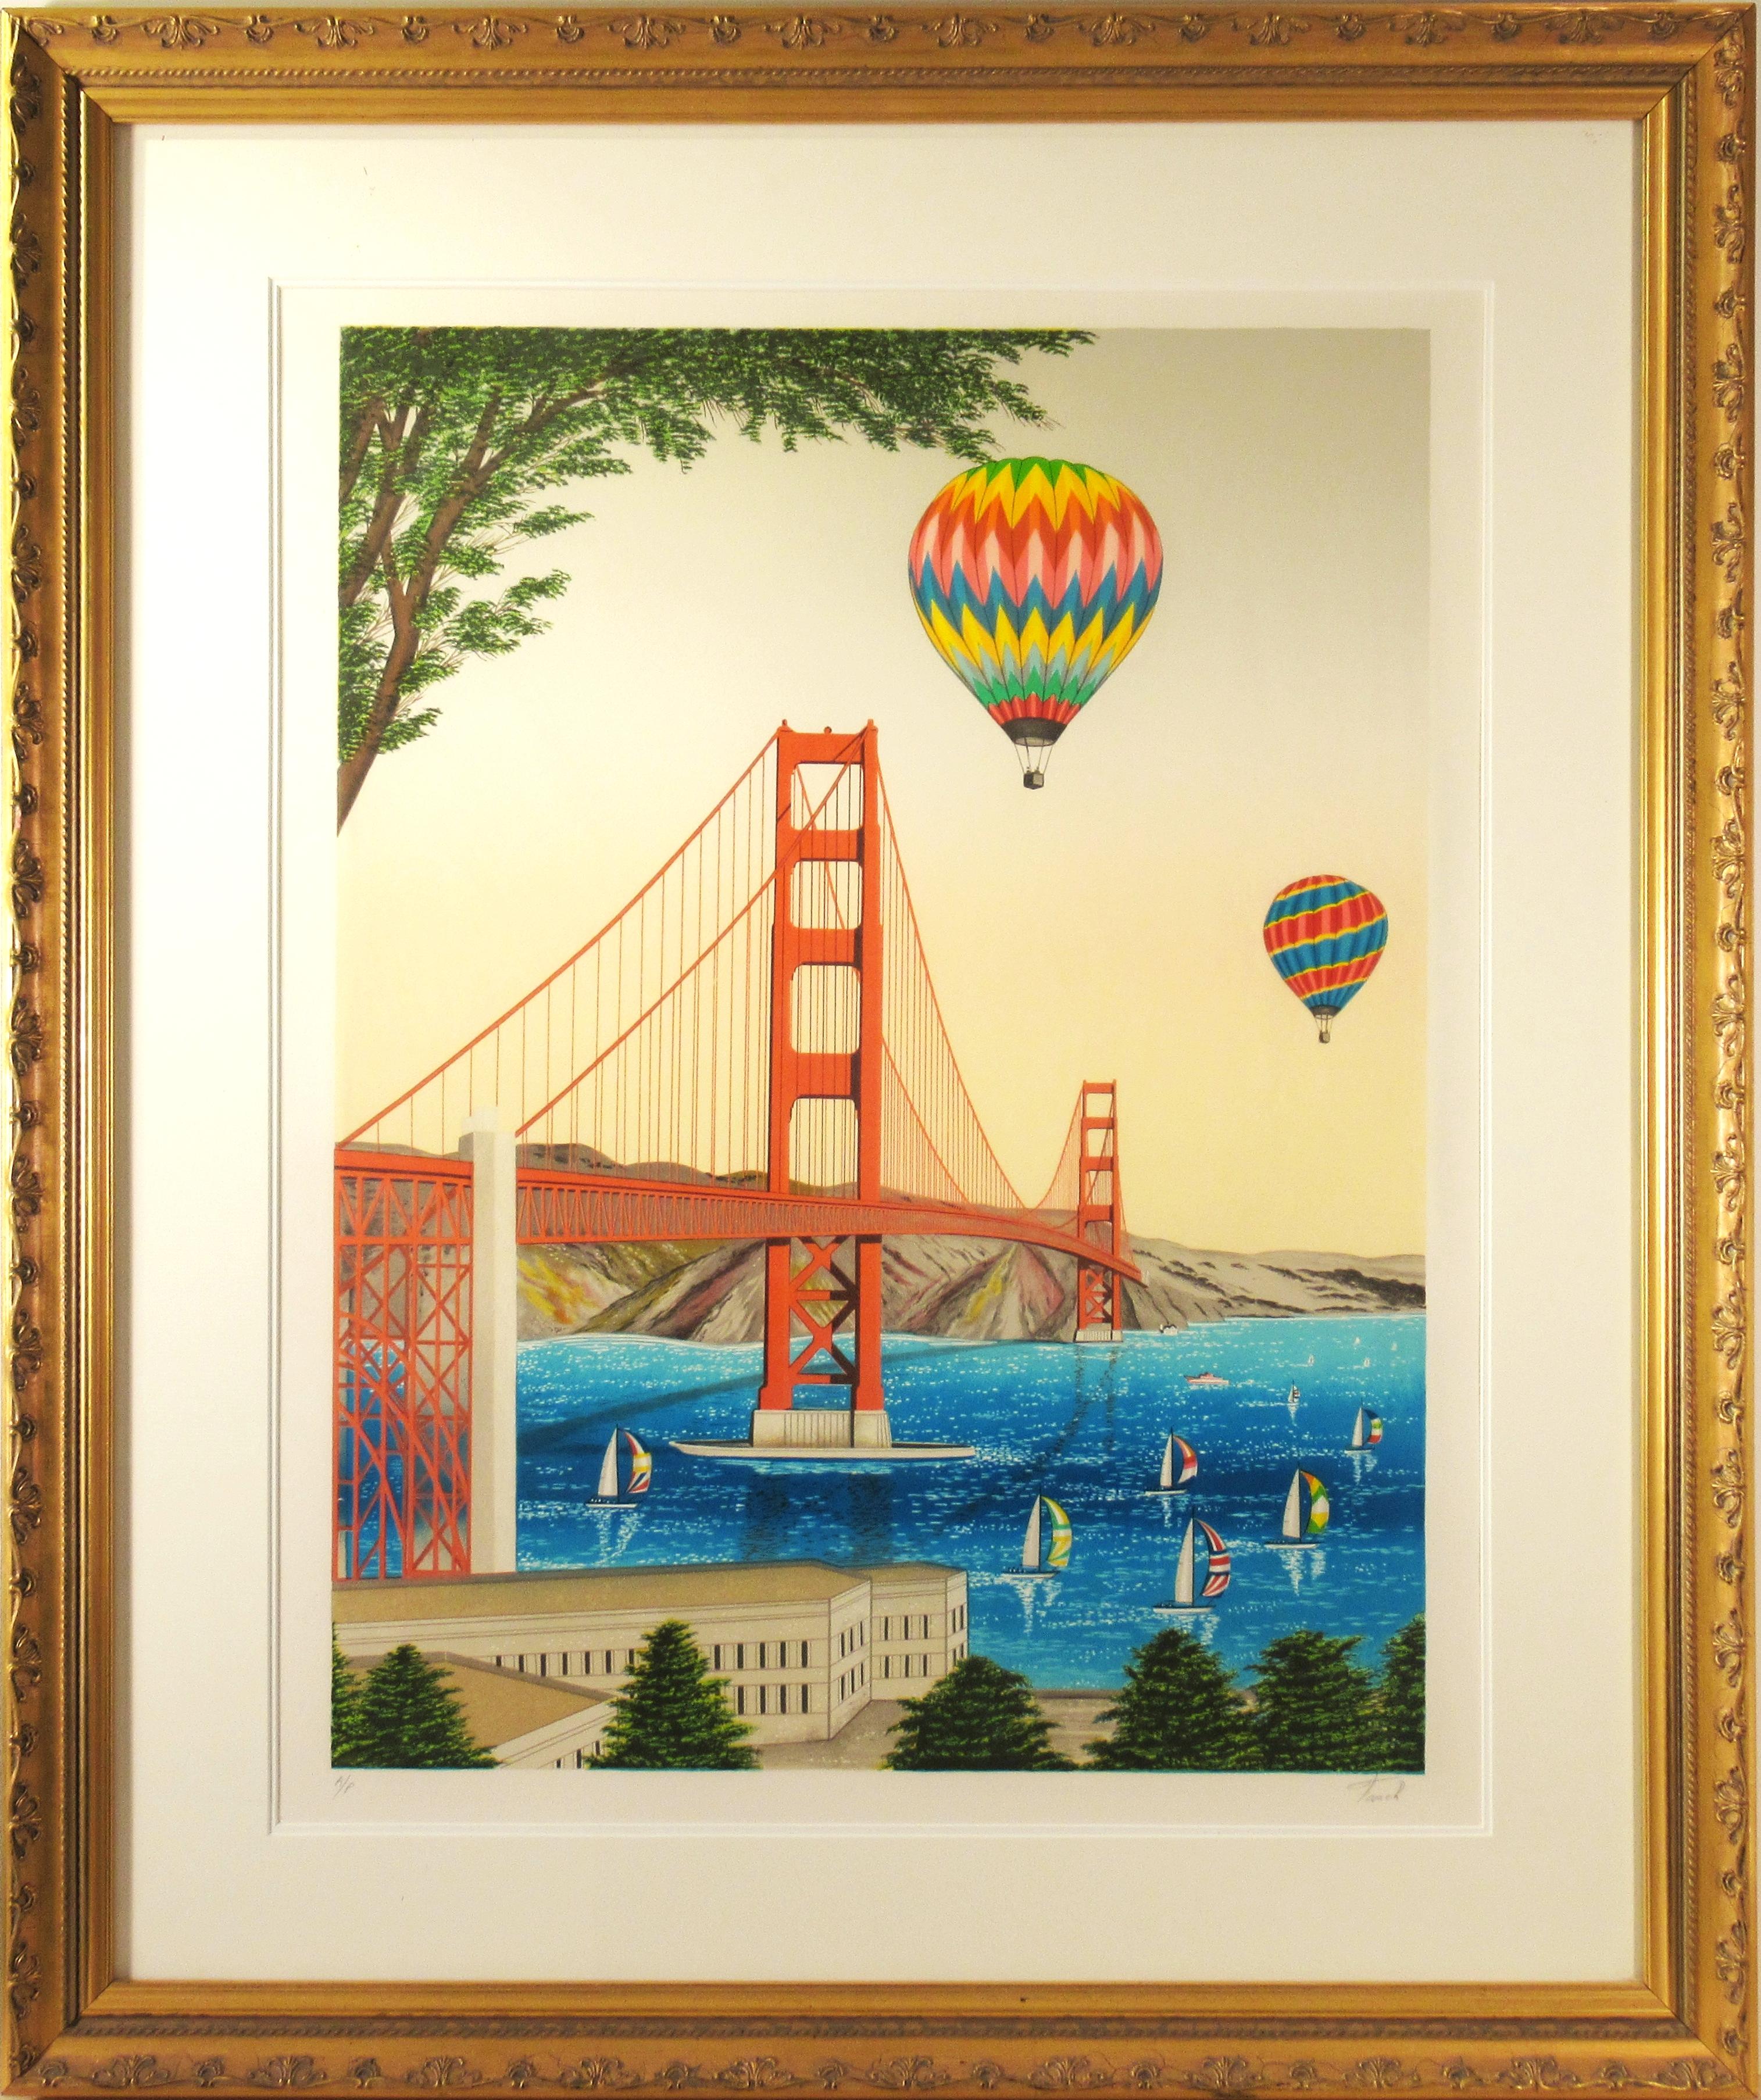 Fanch (Francois Ledan) Landscape Print - Golden Gate Bridge, San Francisco